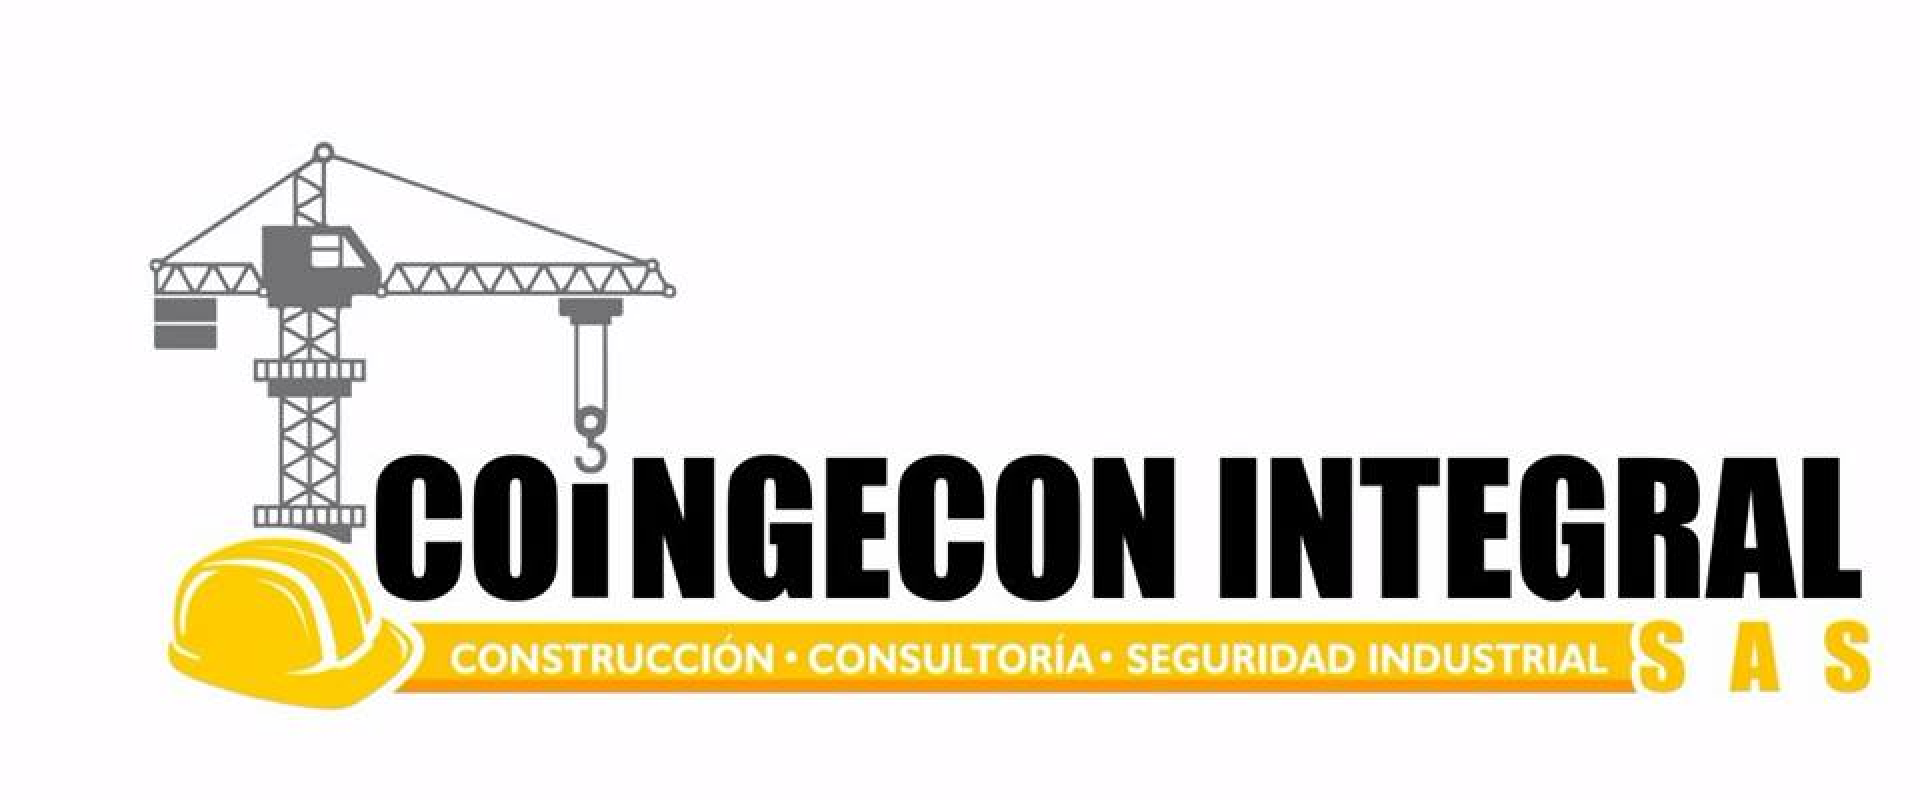 COINGECON INTEGRAL SAS